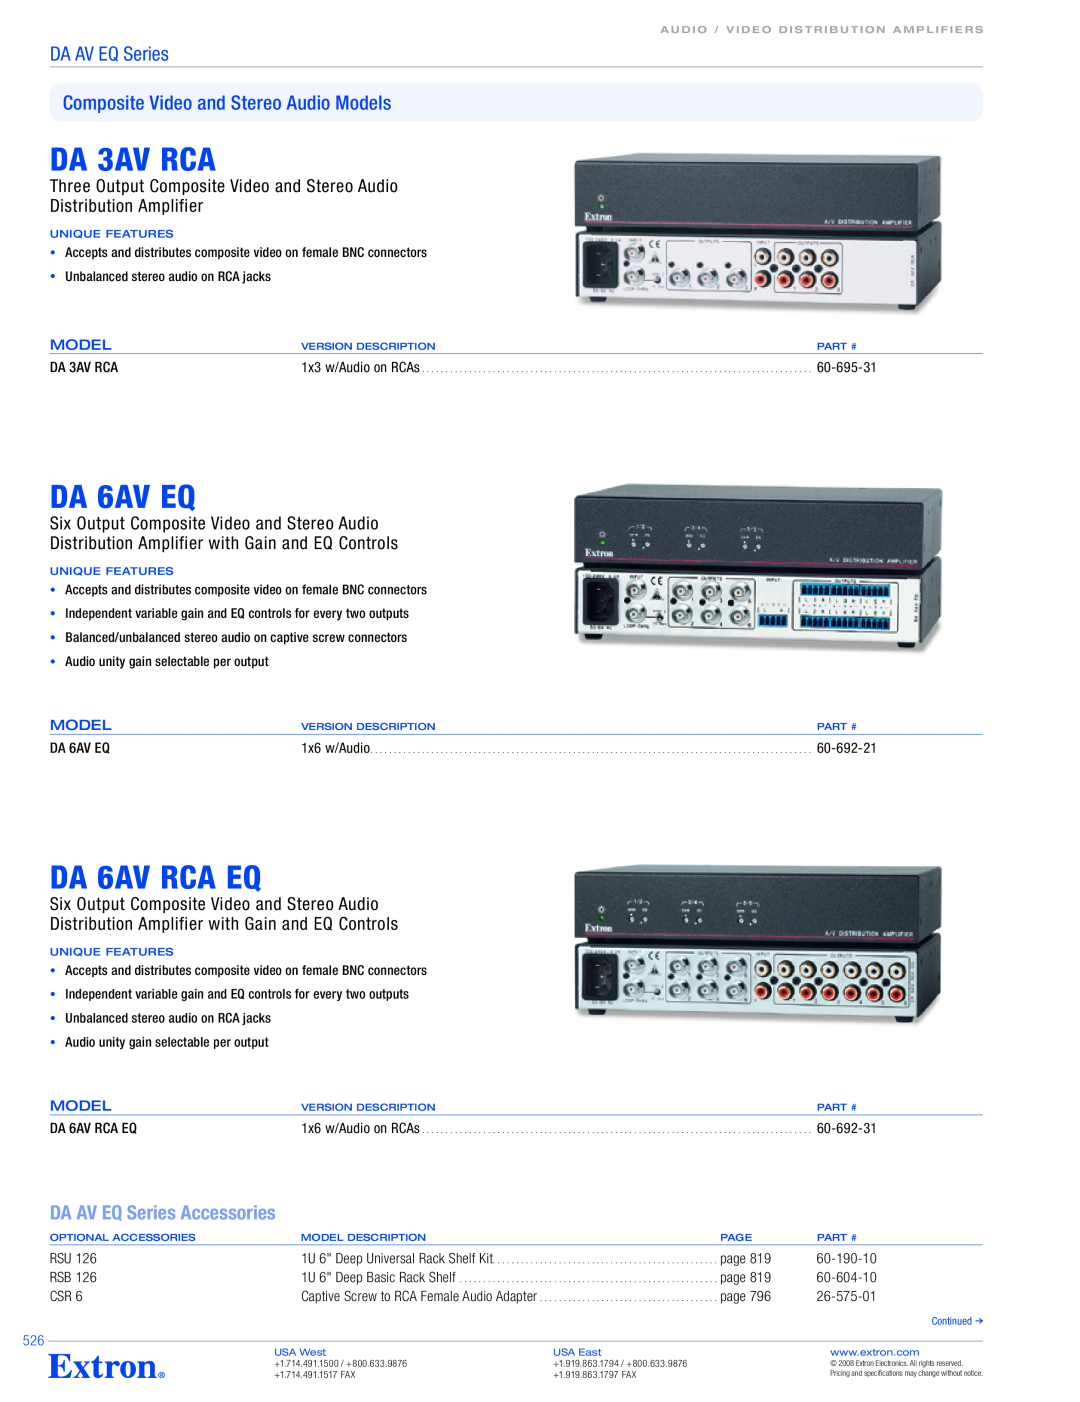 Extron electronic DA AV EQ Series DA 3AV RCA, DA 6AV EQ, DA 6AV RCA EQ, Composite Video and Stereo Audio Models, 60-695-31 